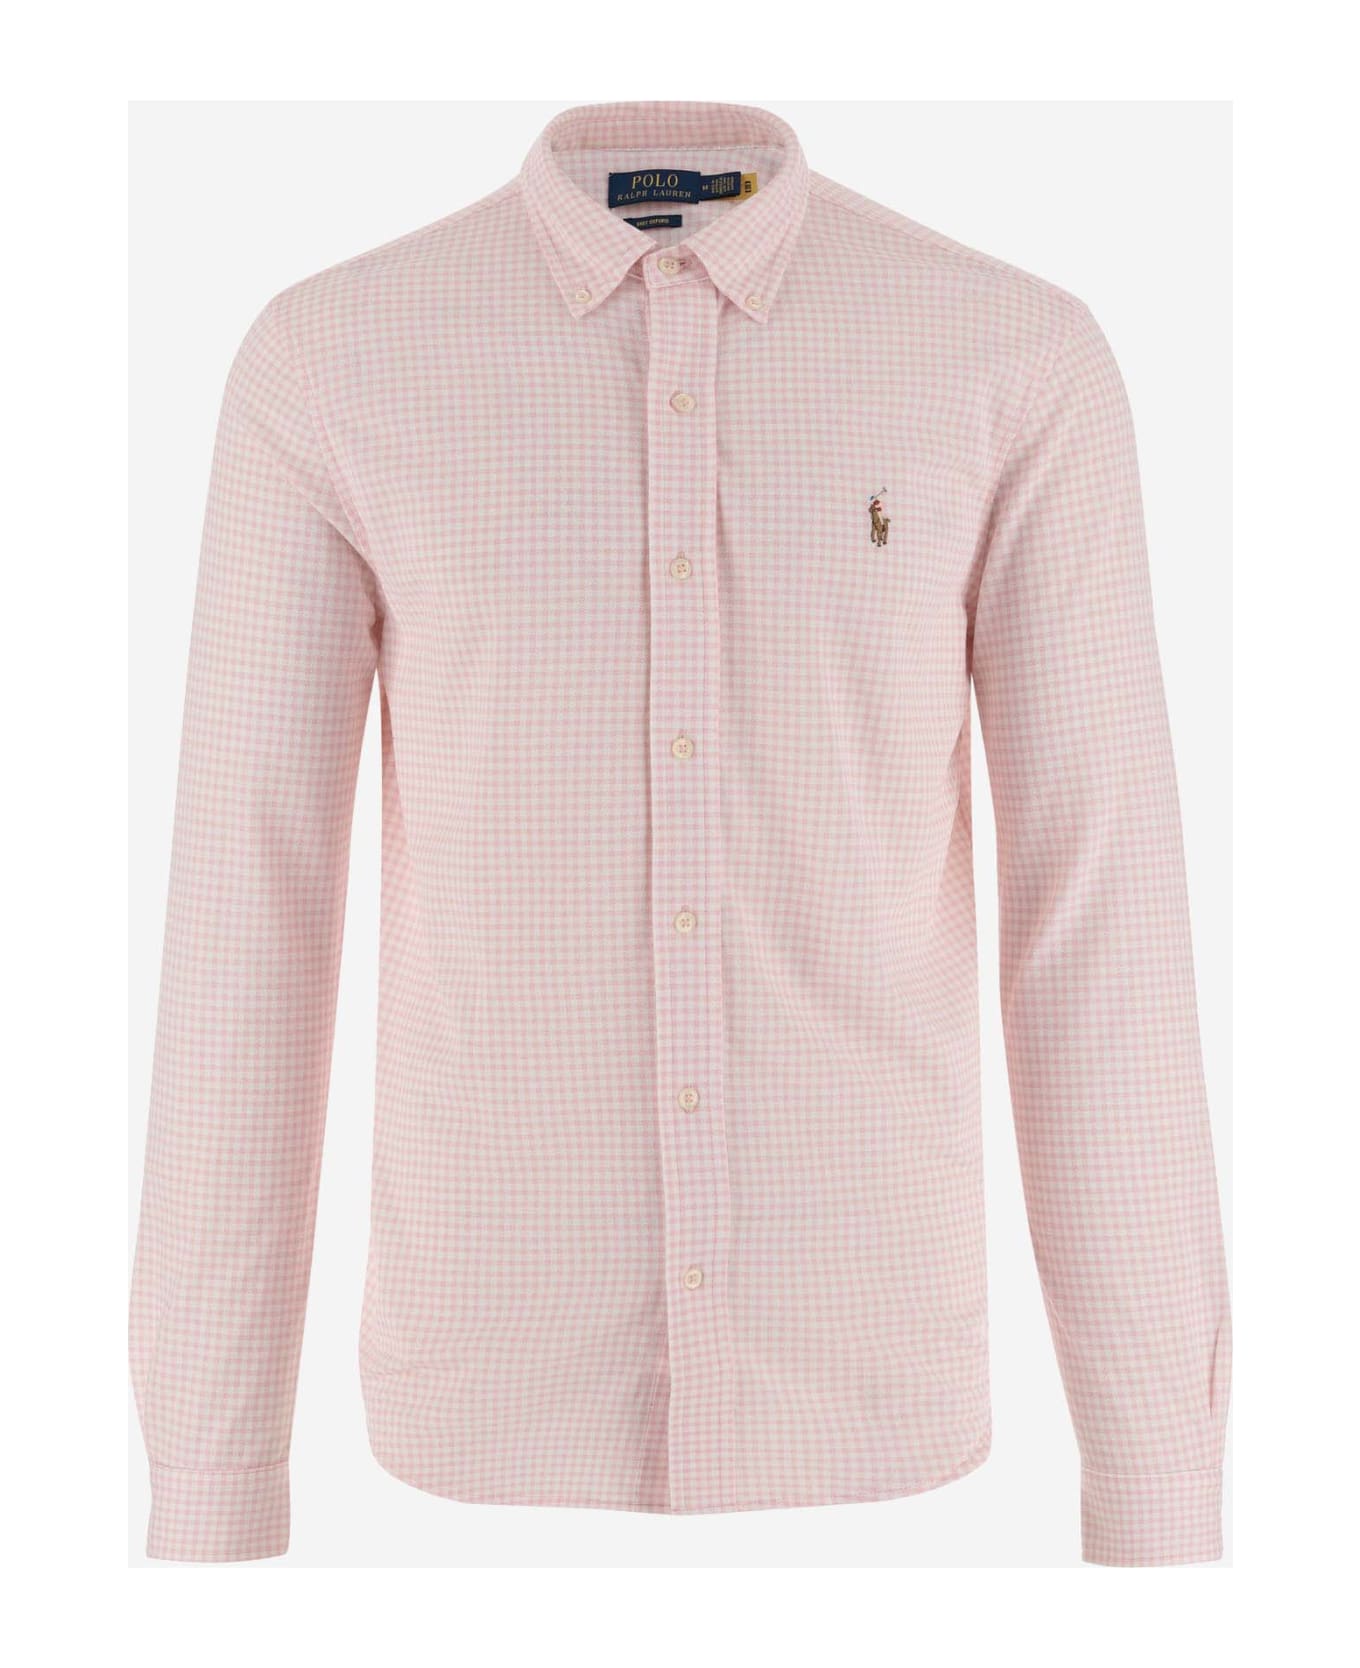 Ralph Lauren Cotton Shirt With Check Pattern - Pink